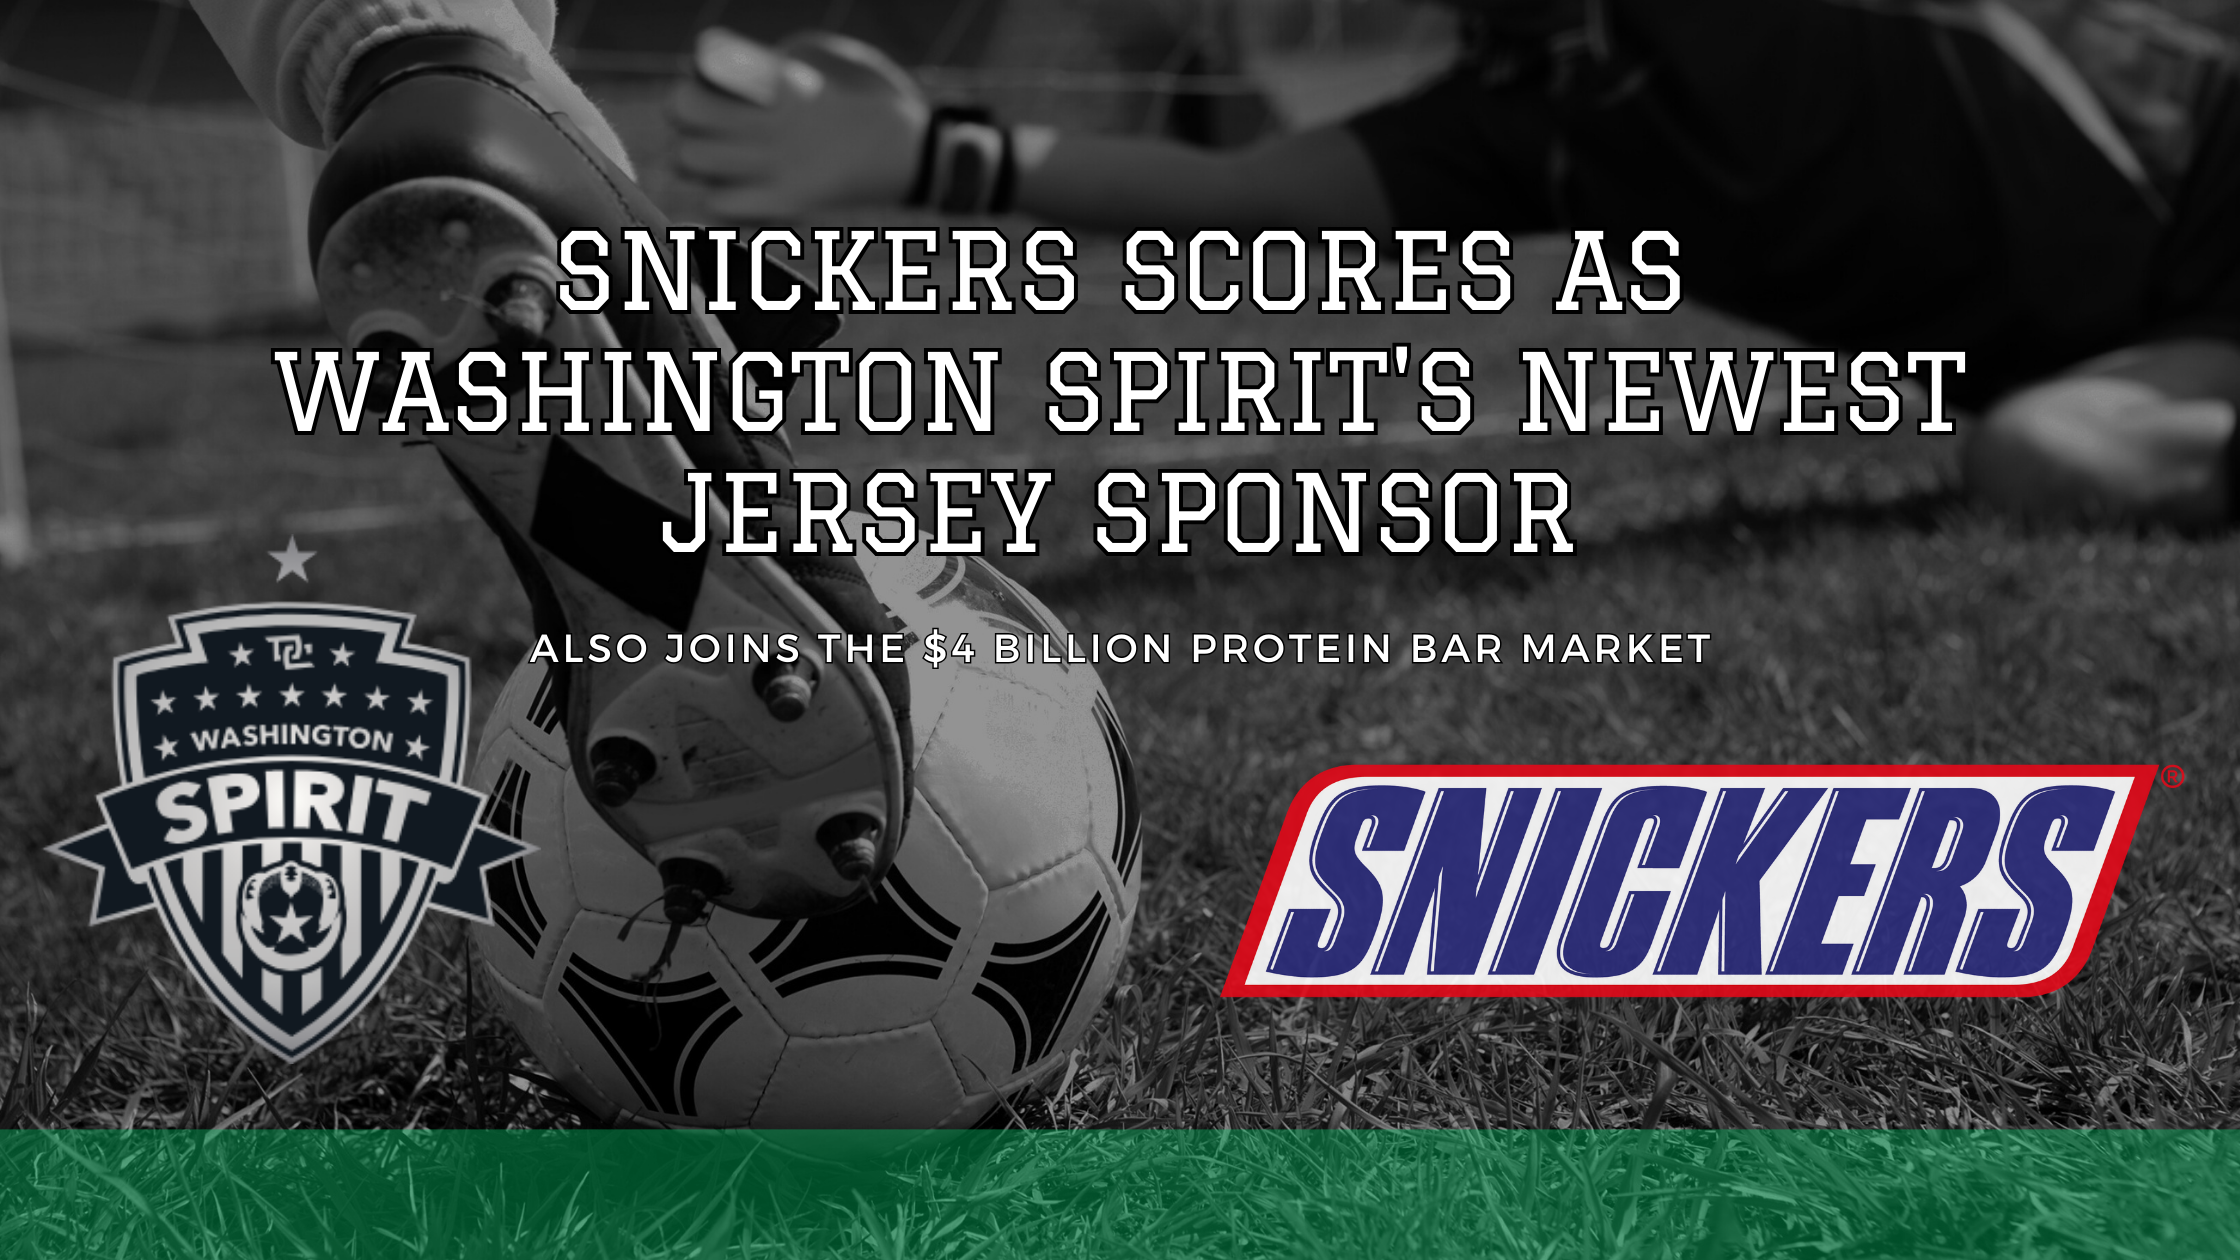 Snickers Scores as Washington Spirit's Newest Jersey Sponsor